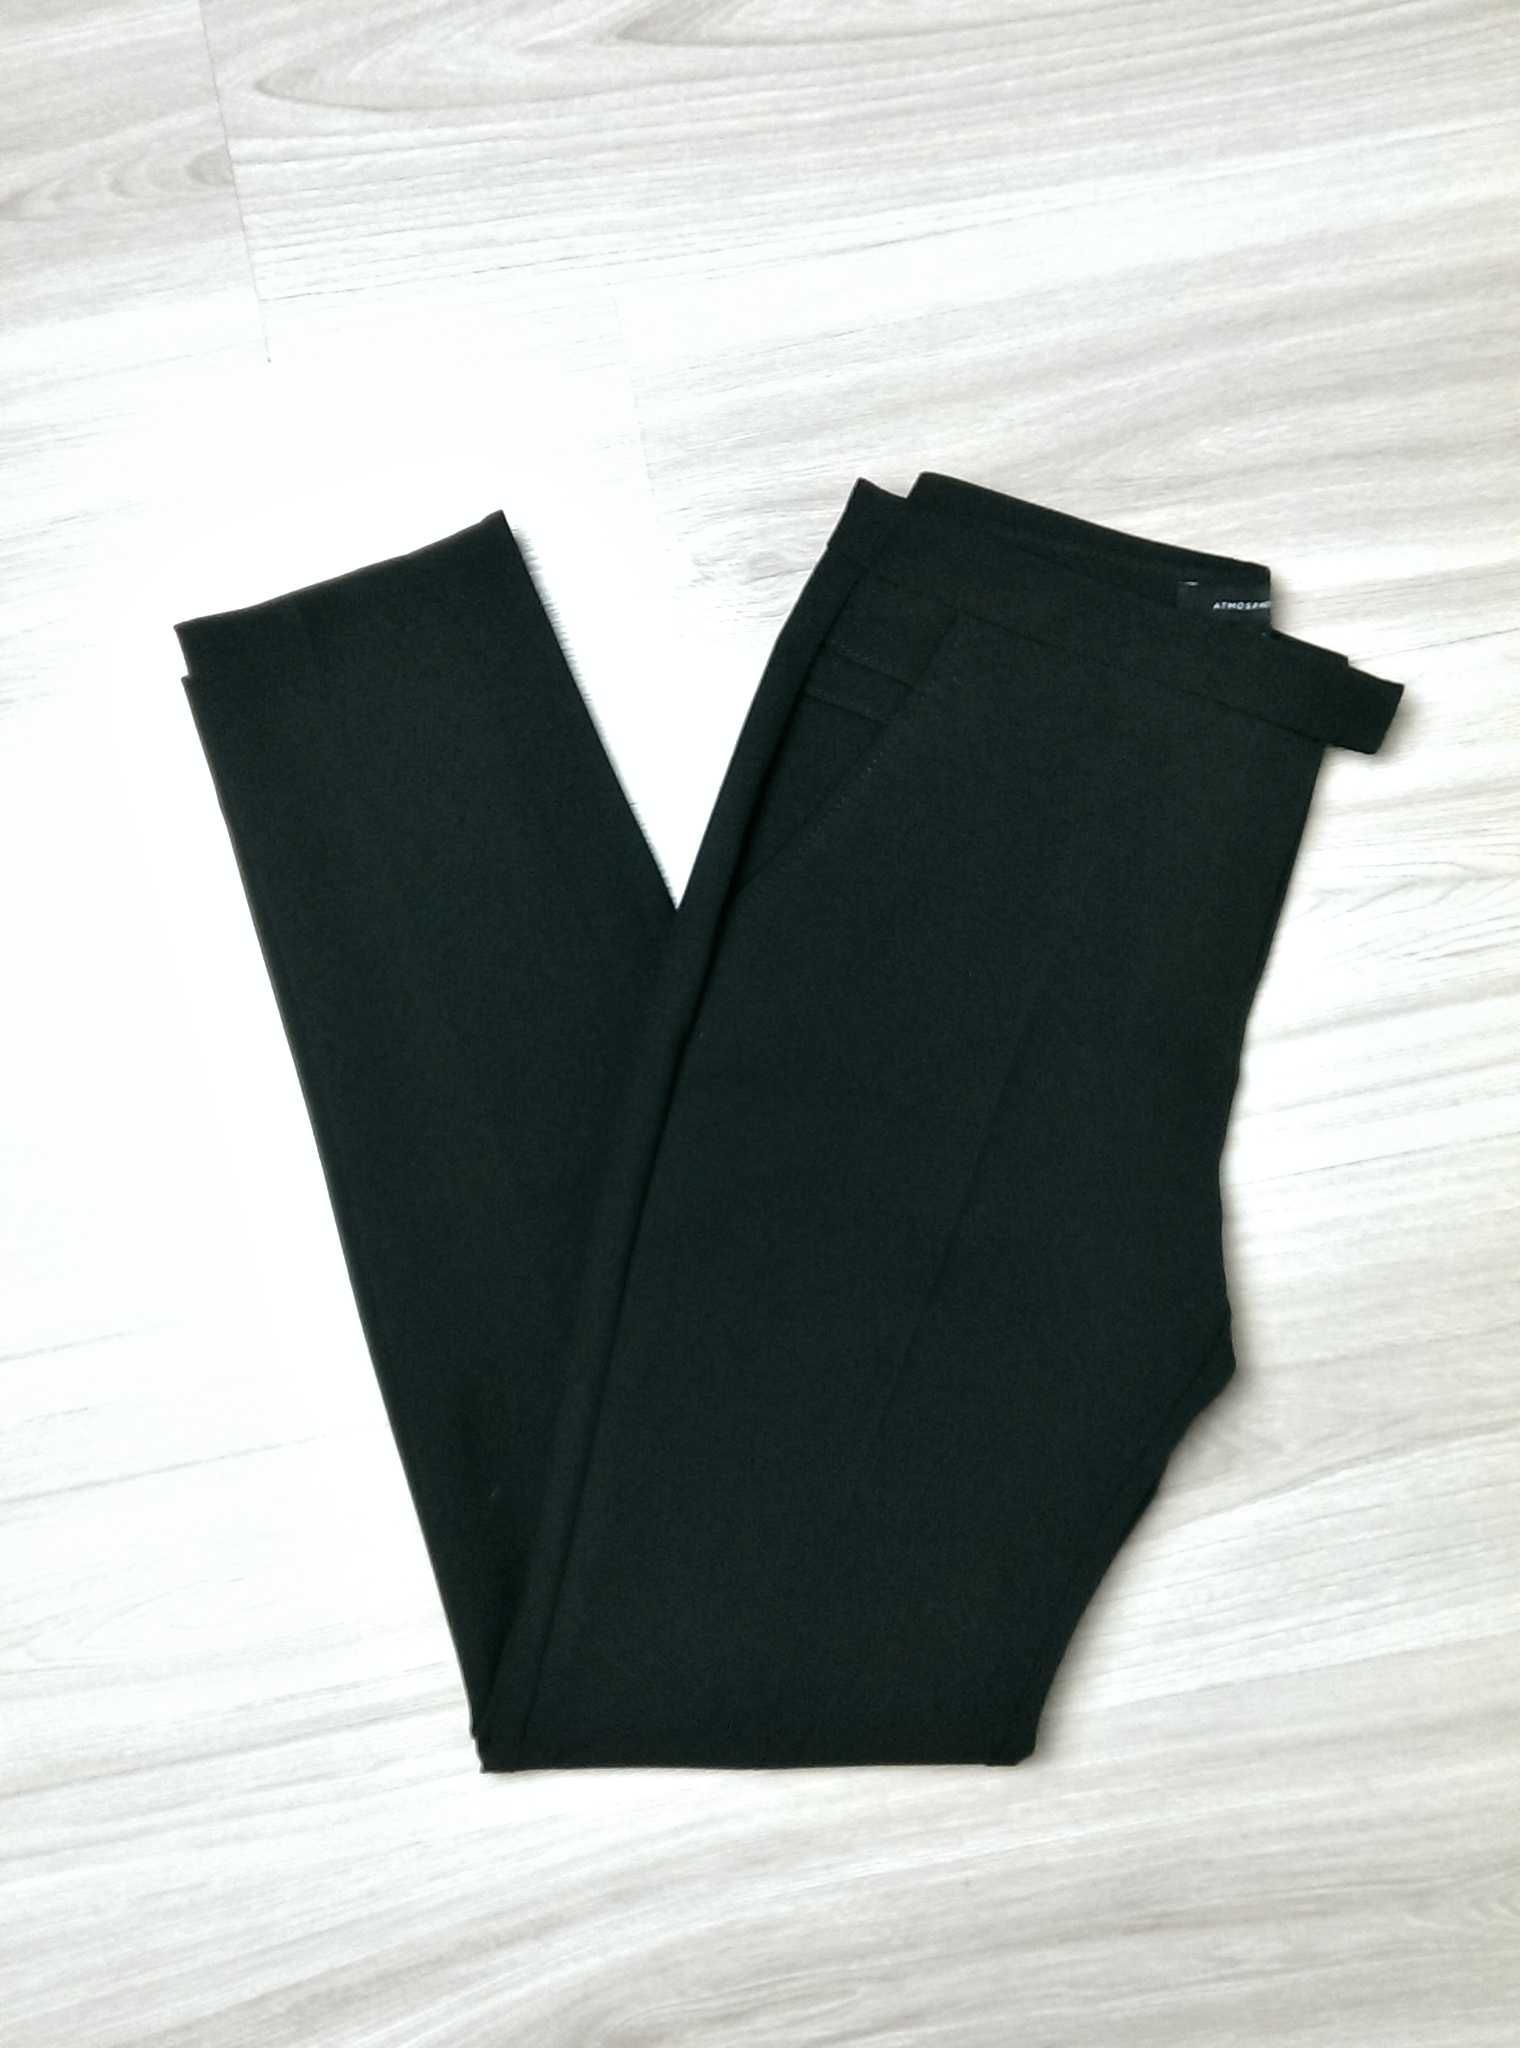 Damskie czarne spodnie garniturowe galowe eleganckie Atmosphere 34